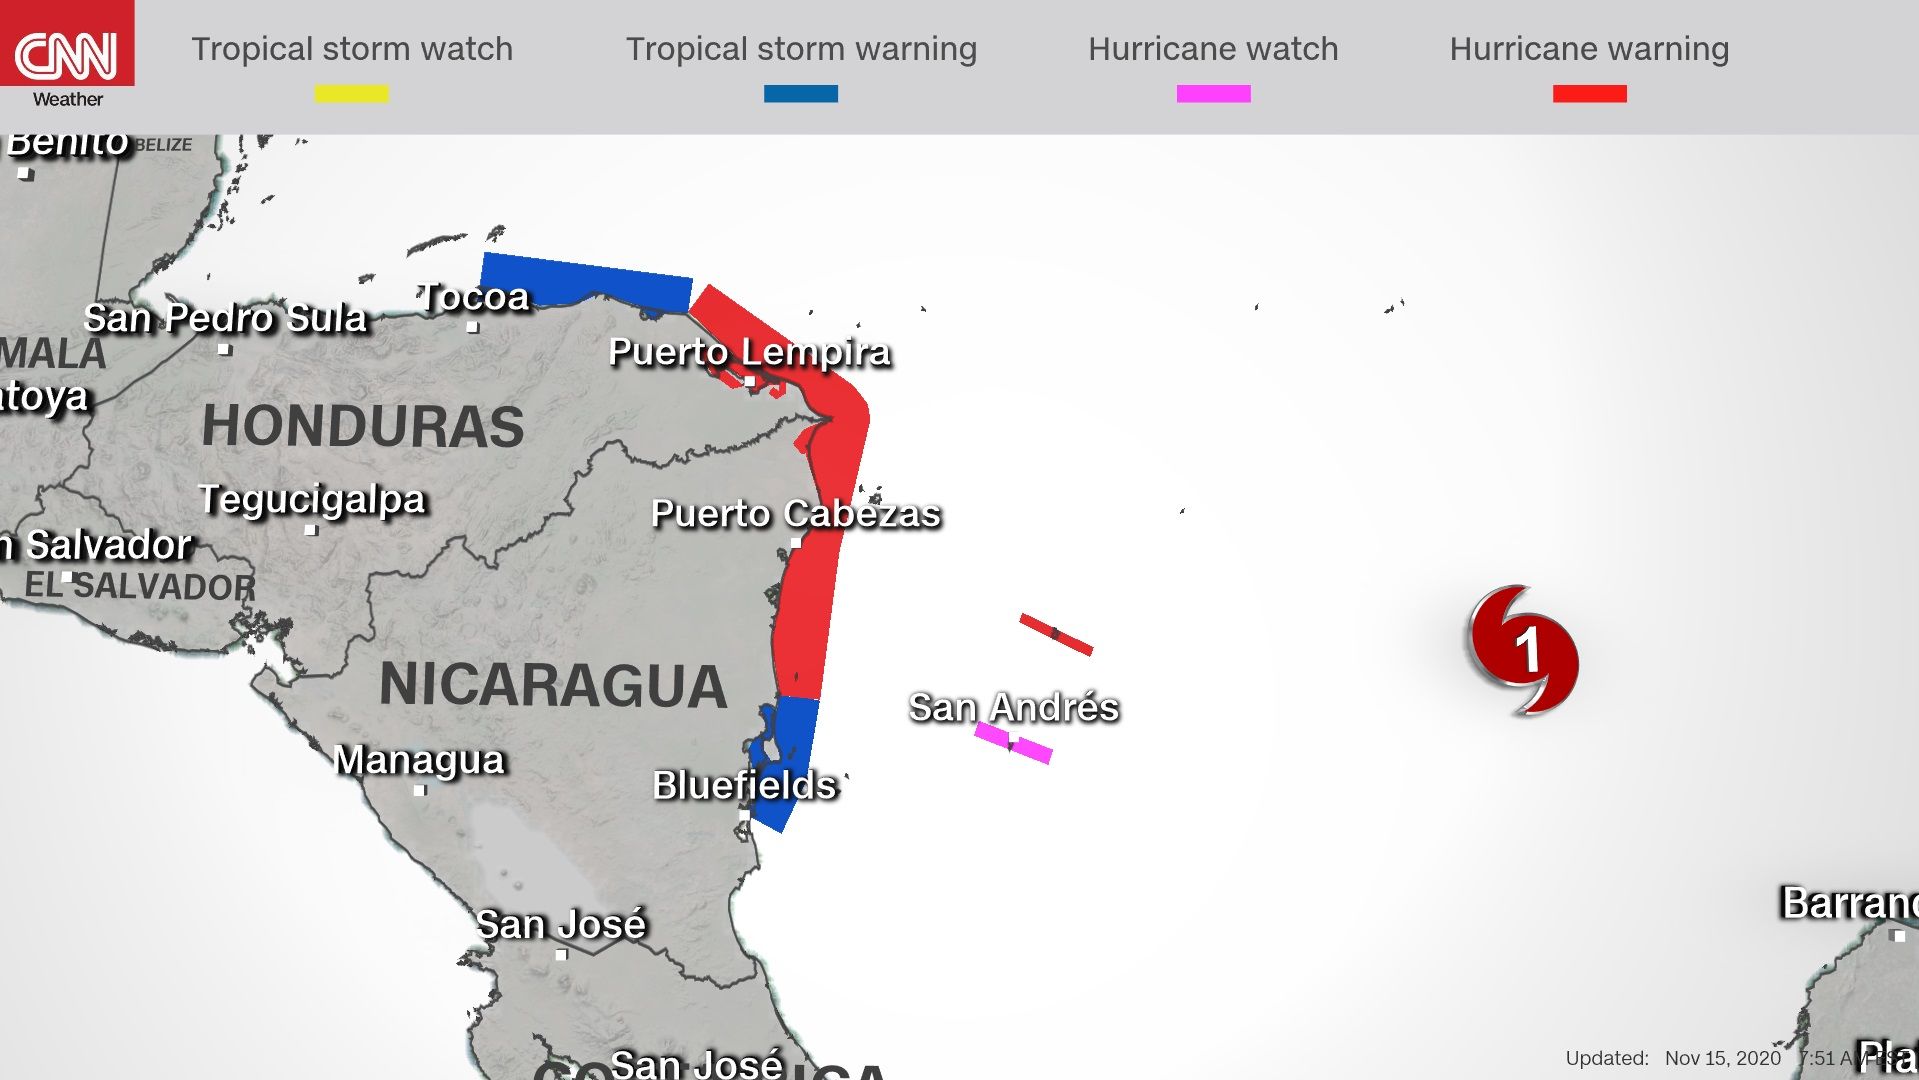 weather hurricane iota watches warnings 11152020